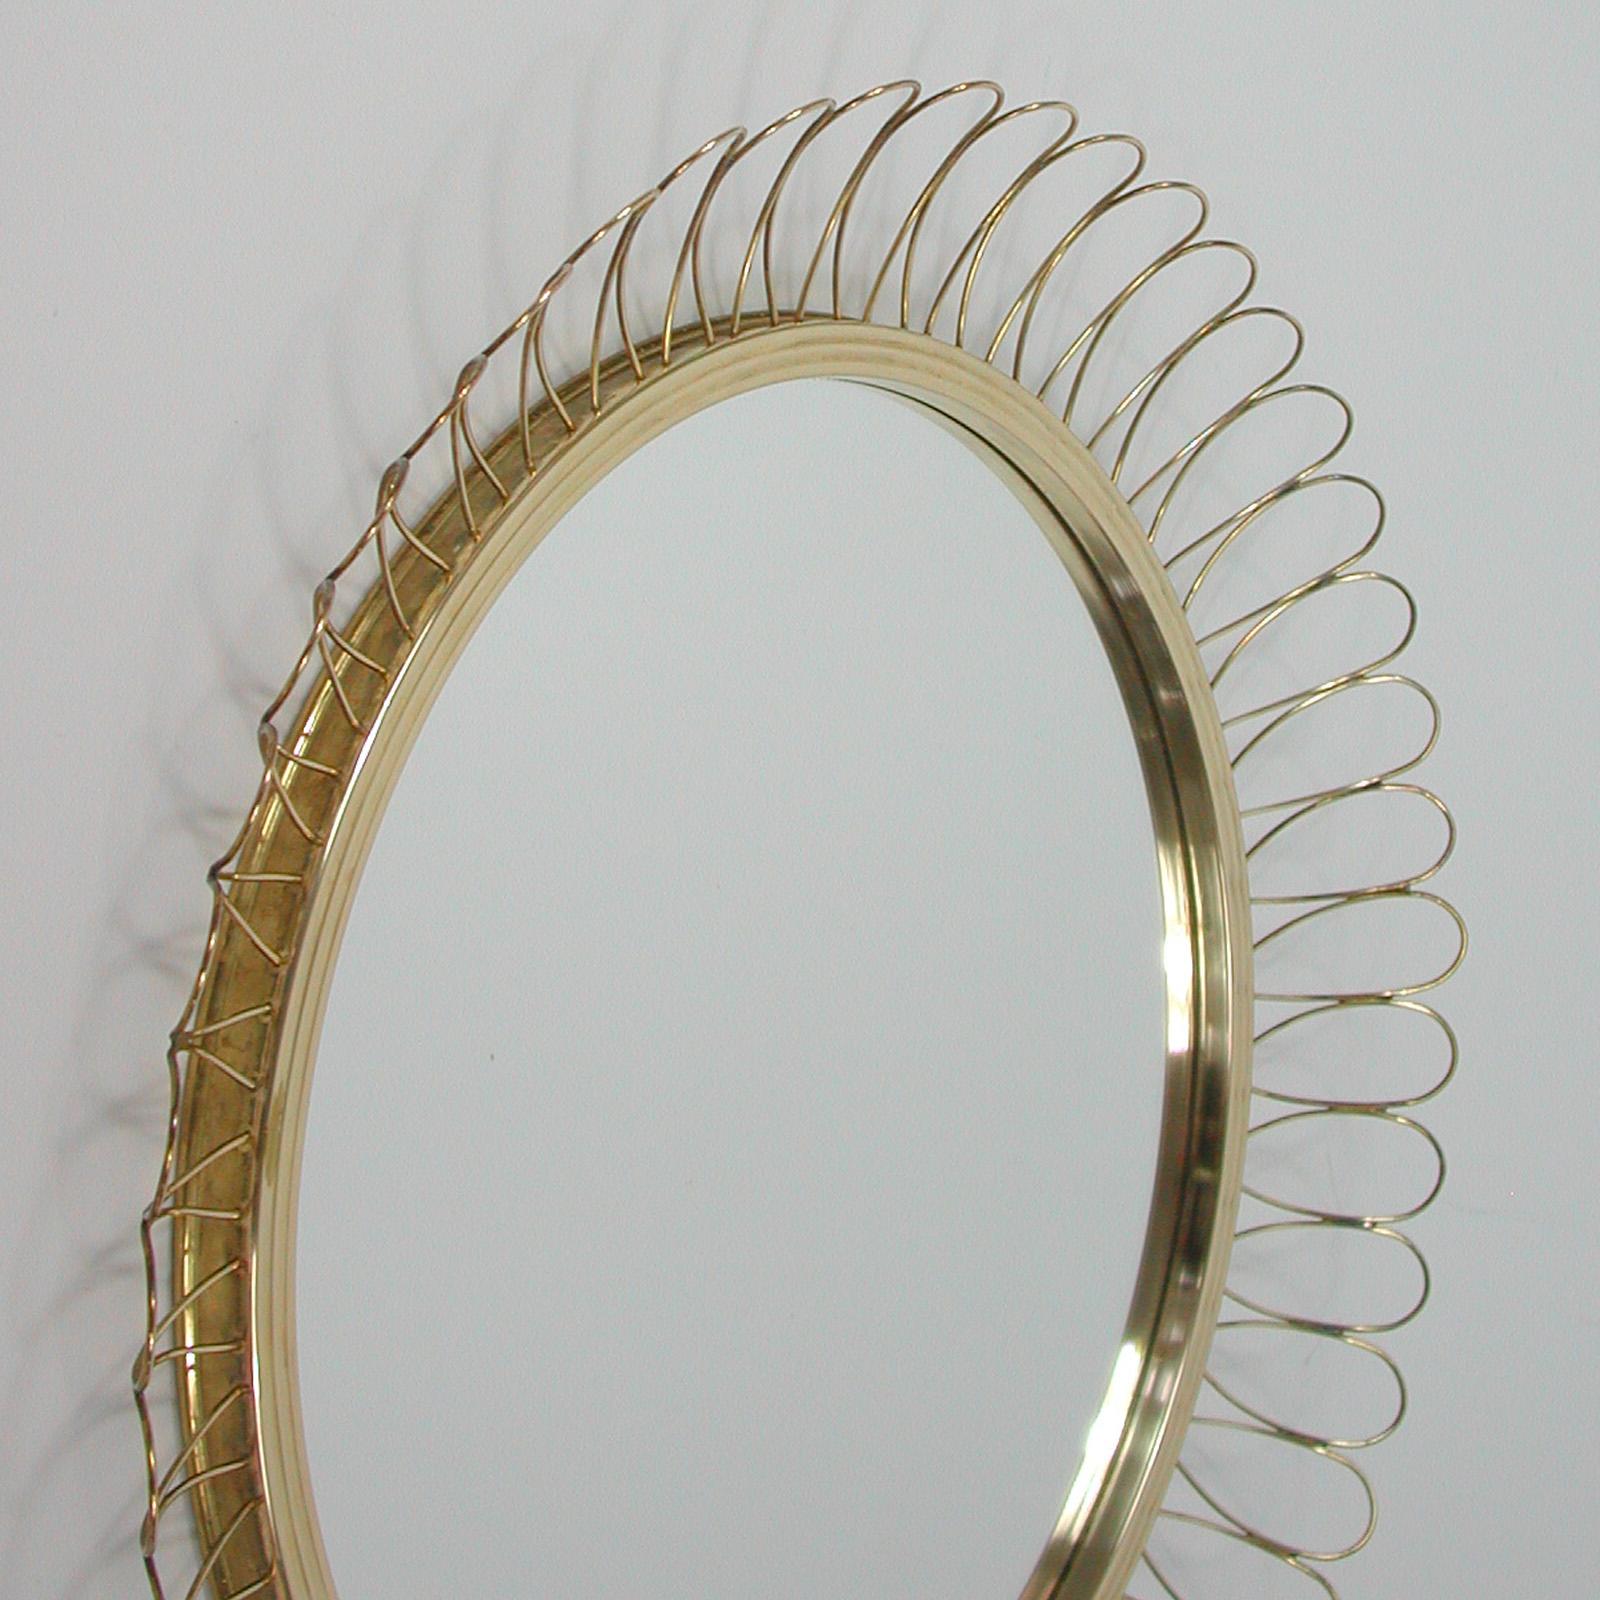 Mid-20th Century Midcentury Sculptural Round Brass Wall Mirror, Sweden 1950s For Sale